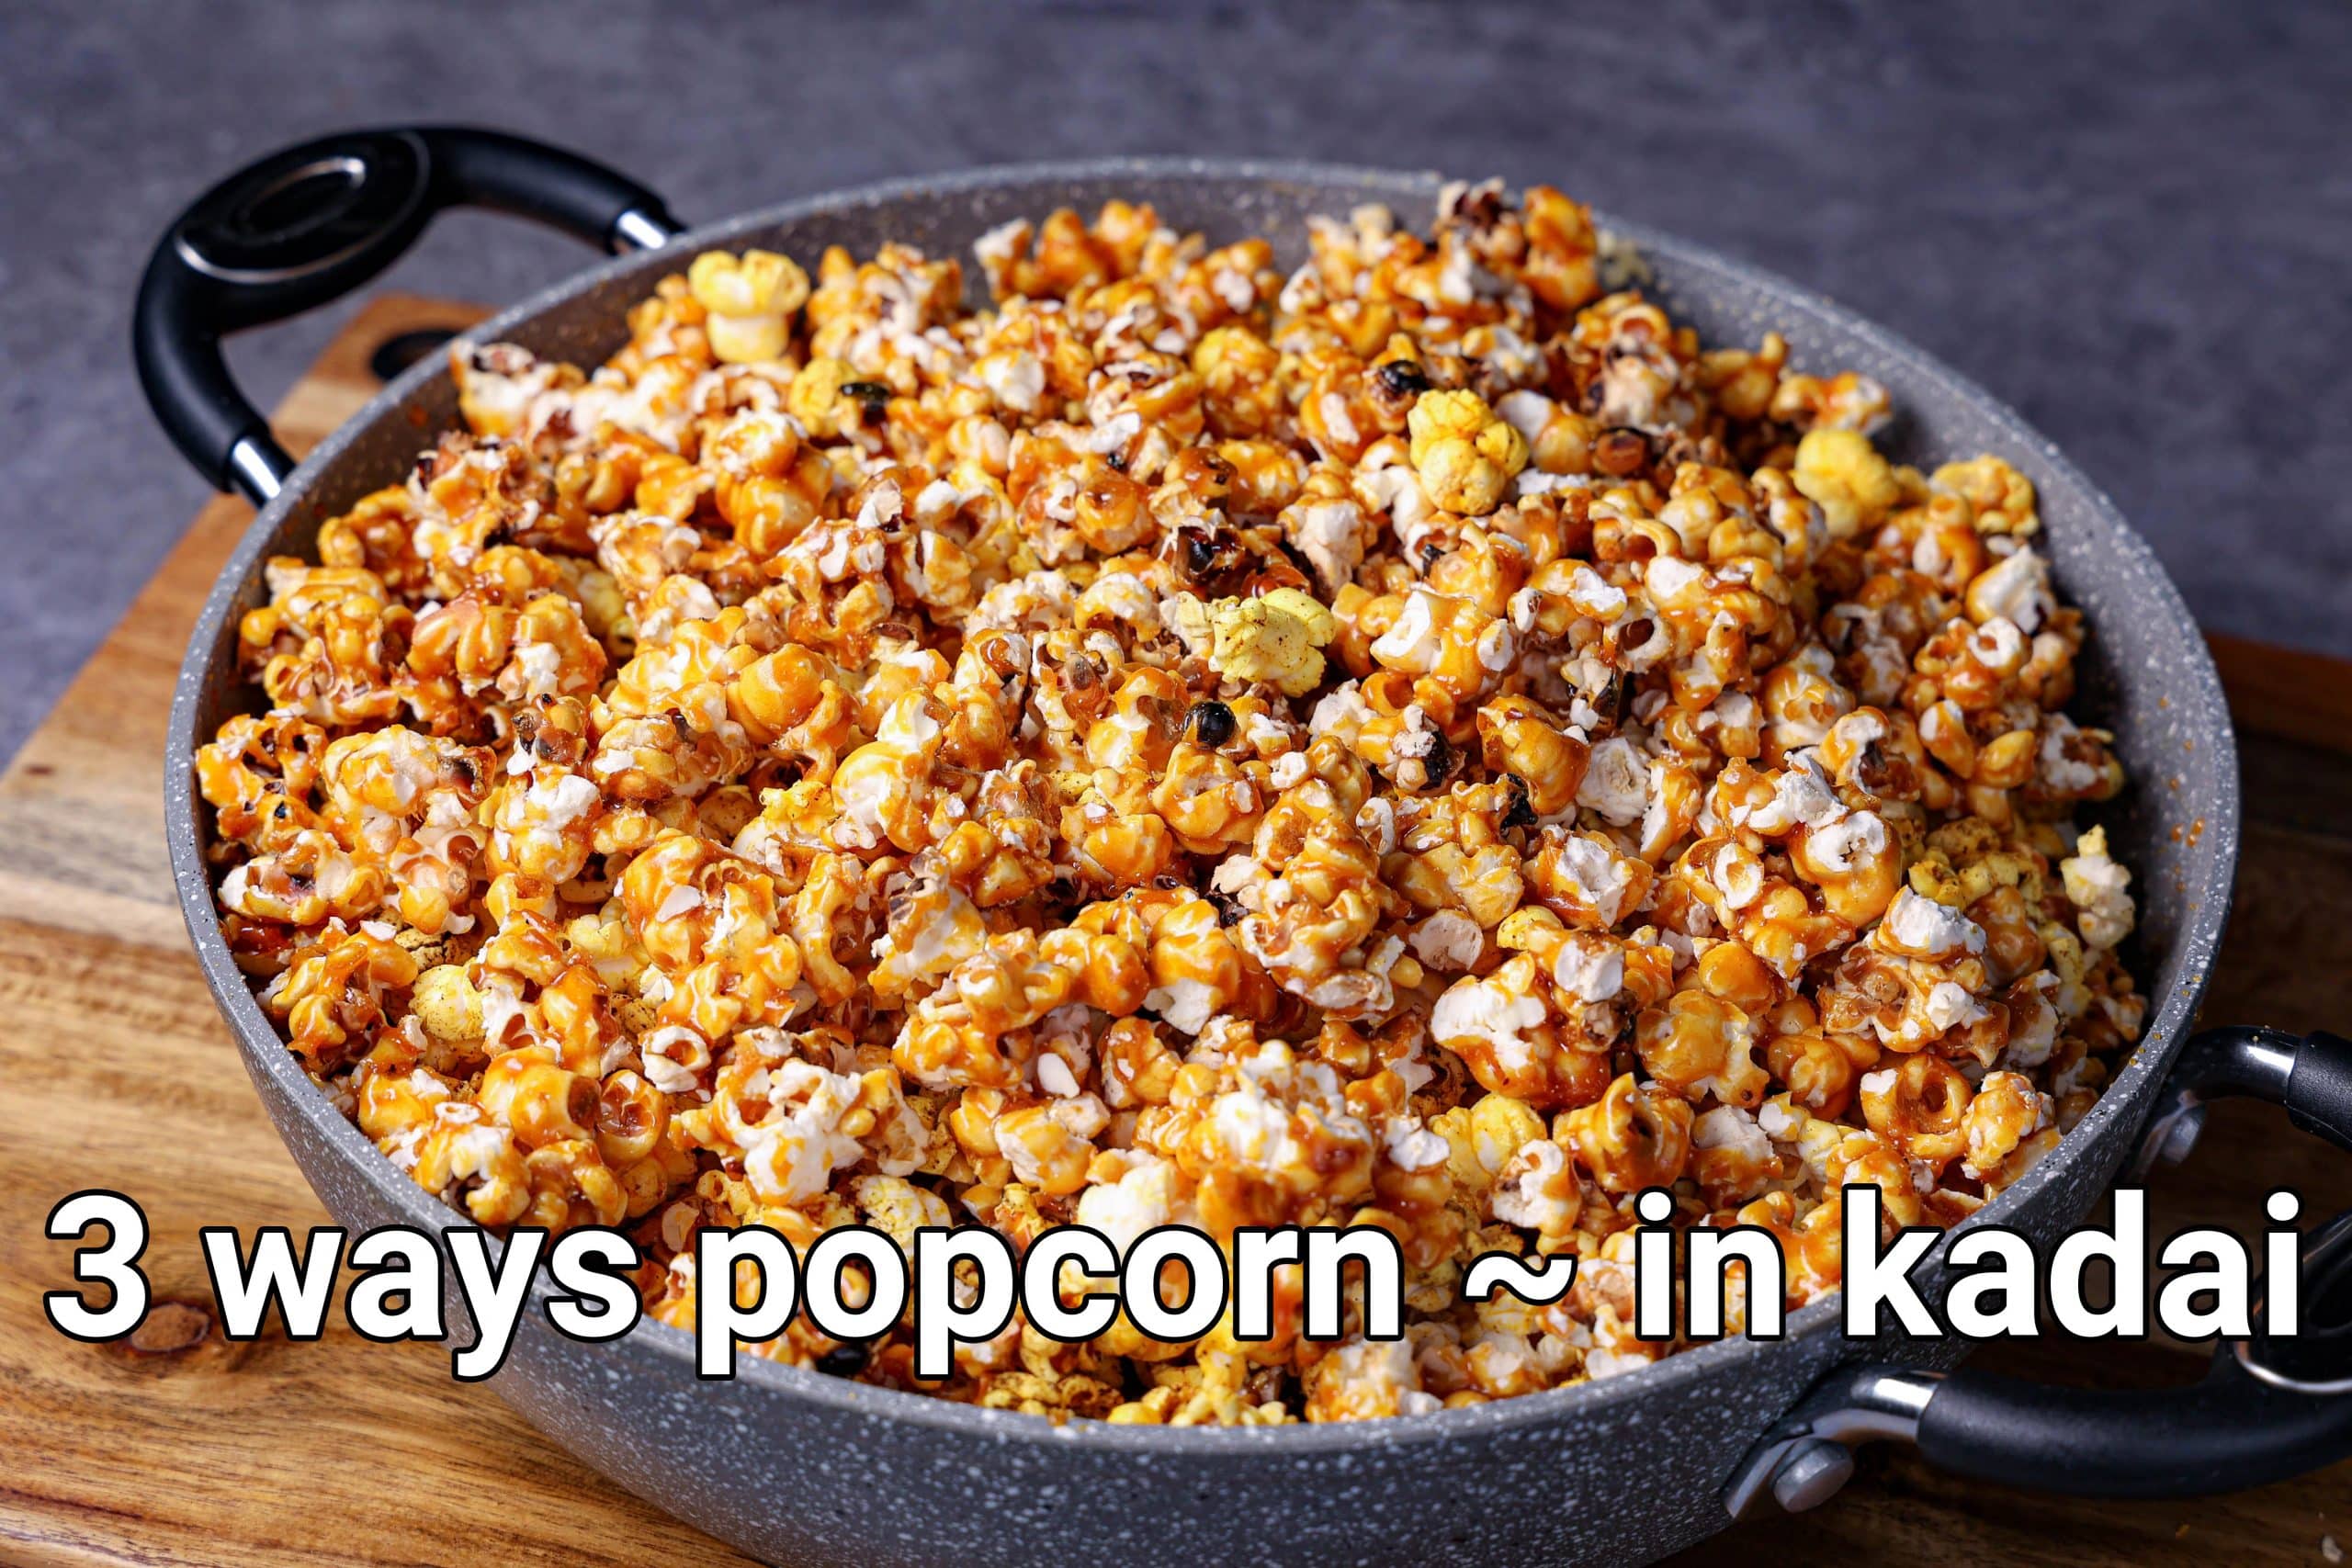 Buttery Movie Theater Popcorn Recipe